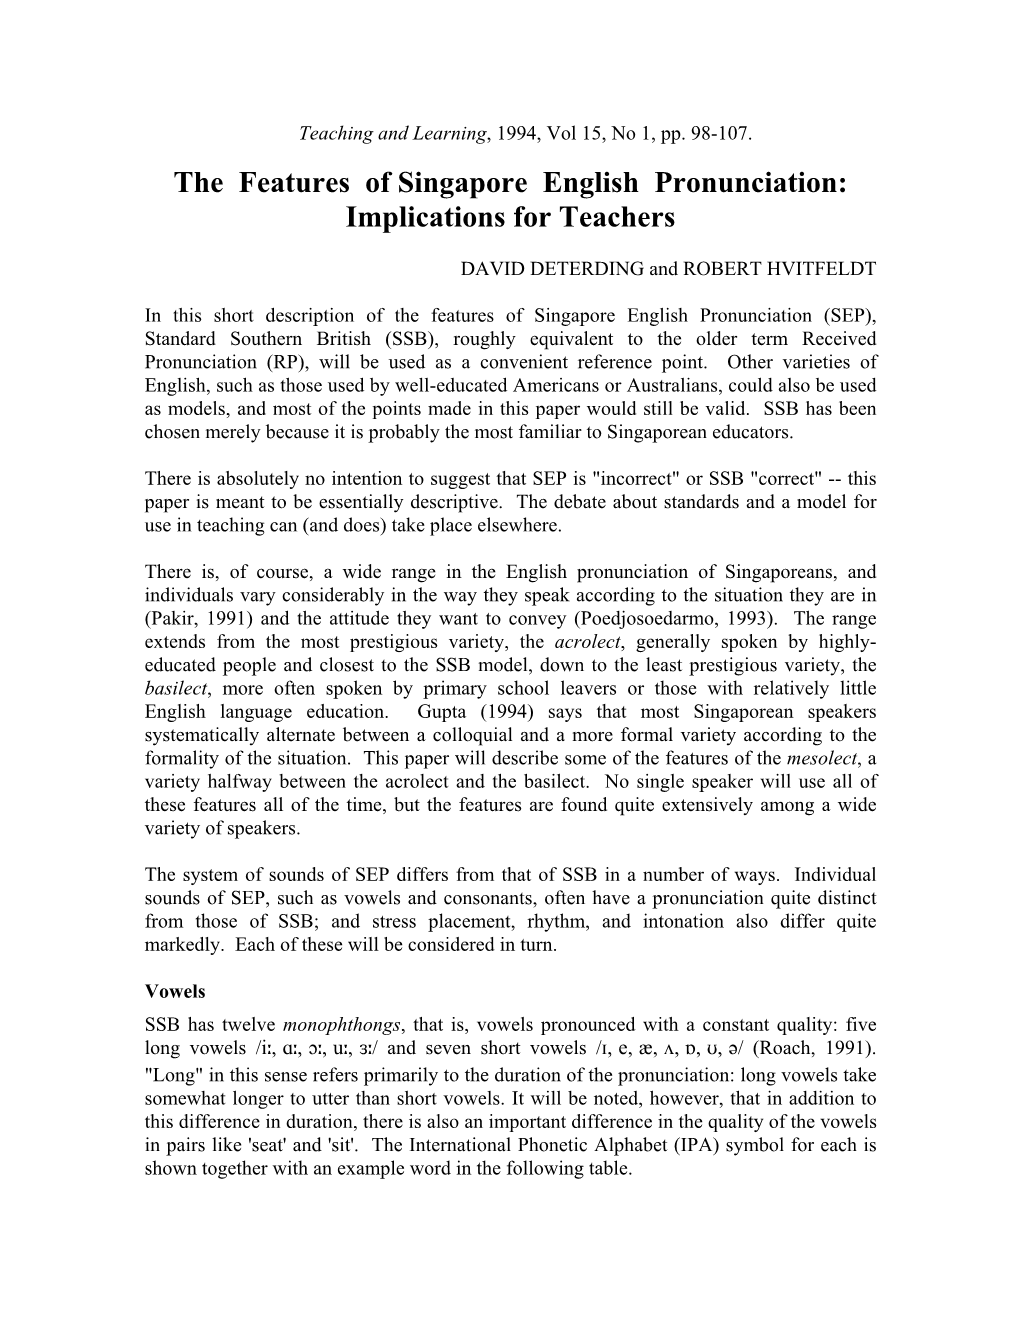 Singapore English Pronunciation: Implications for Teachers